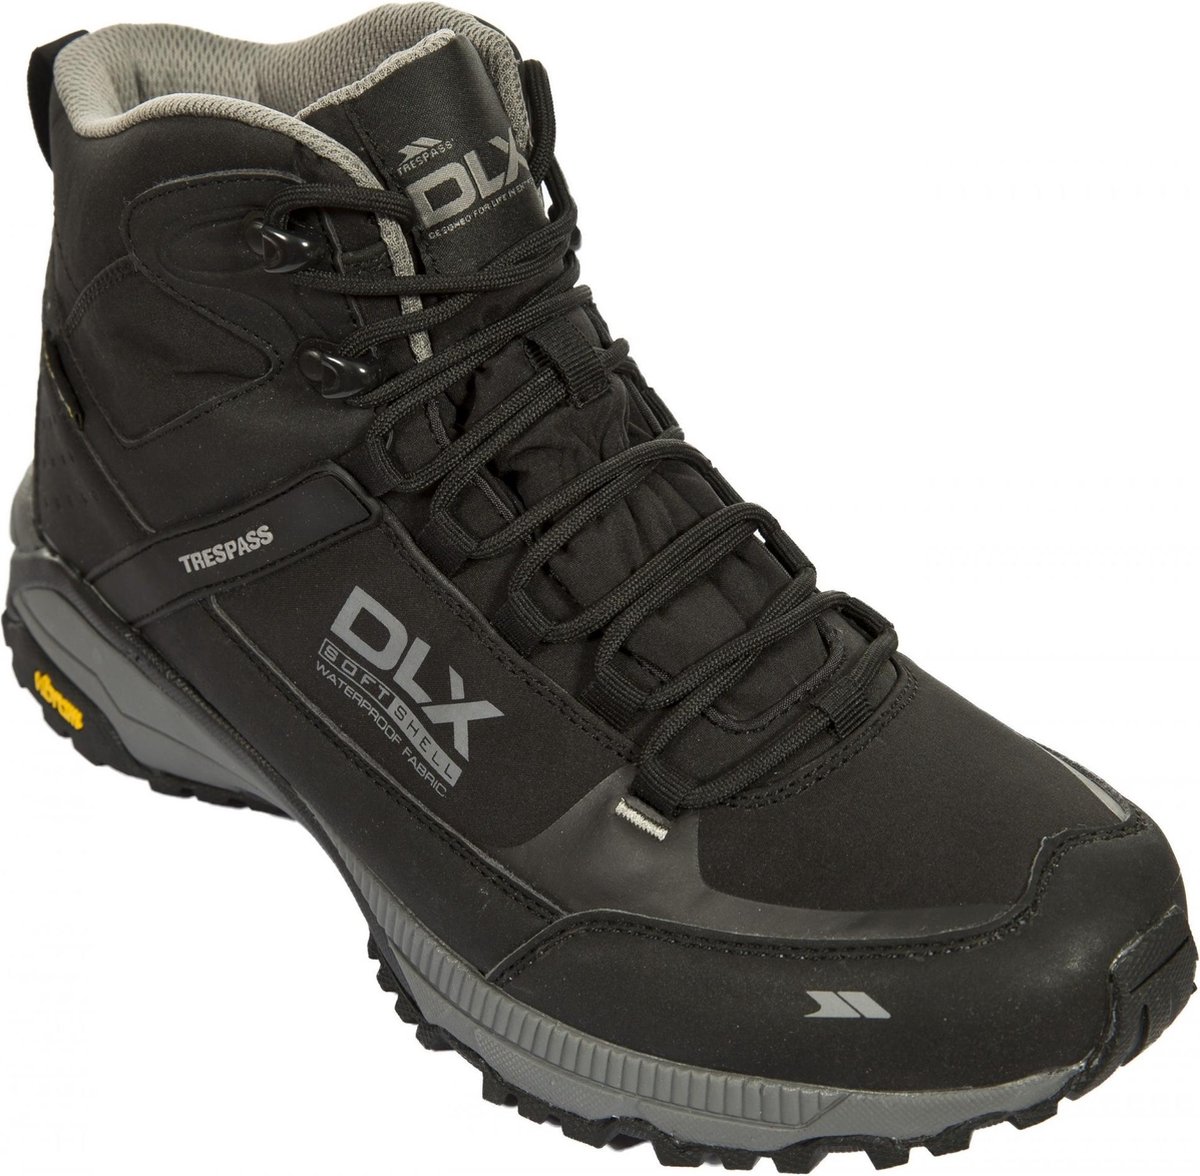 DLX Wanderschuhe Renton - Male Dlx Boot Black-44